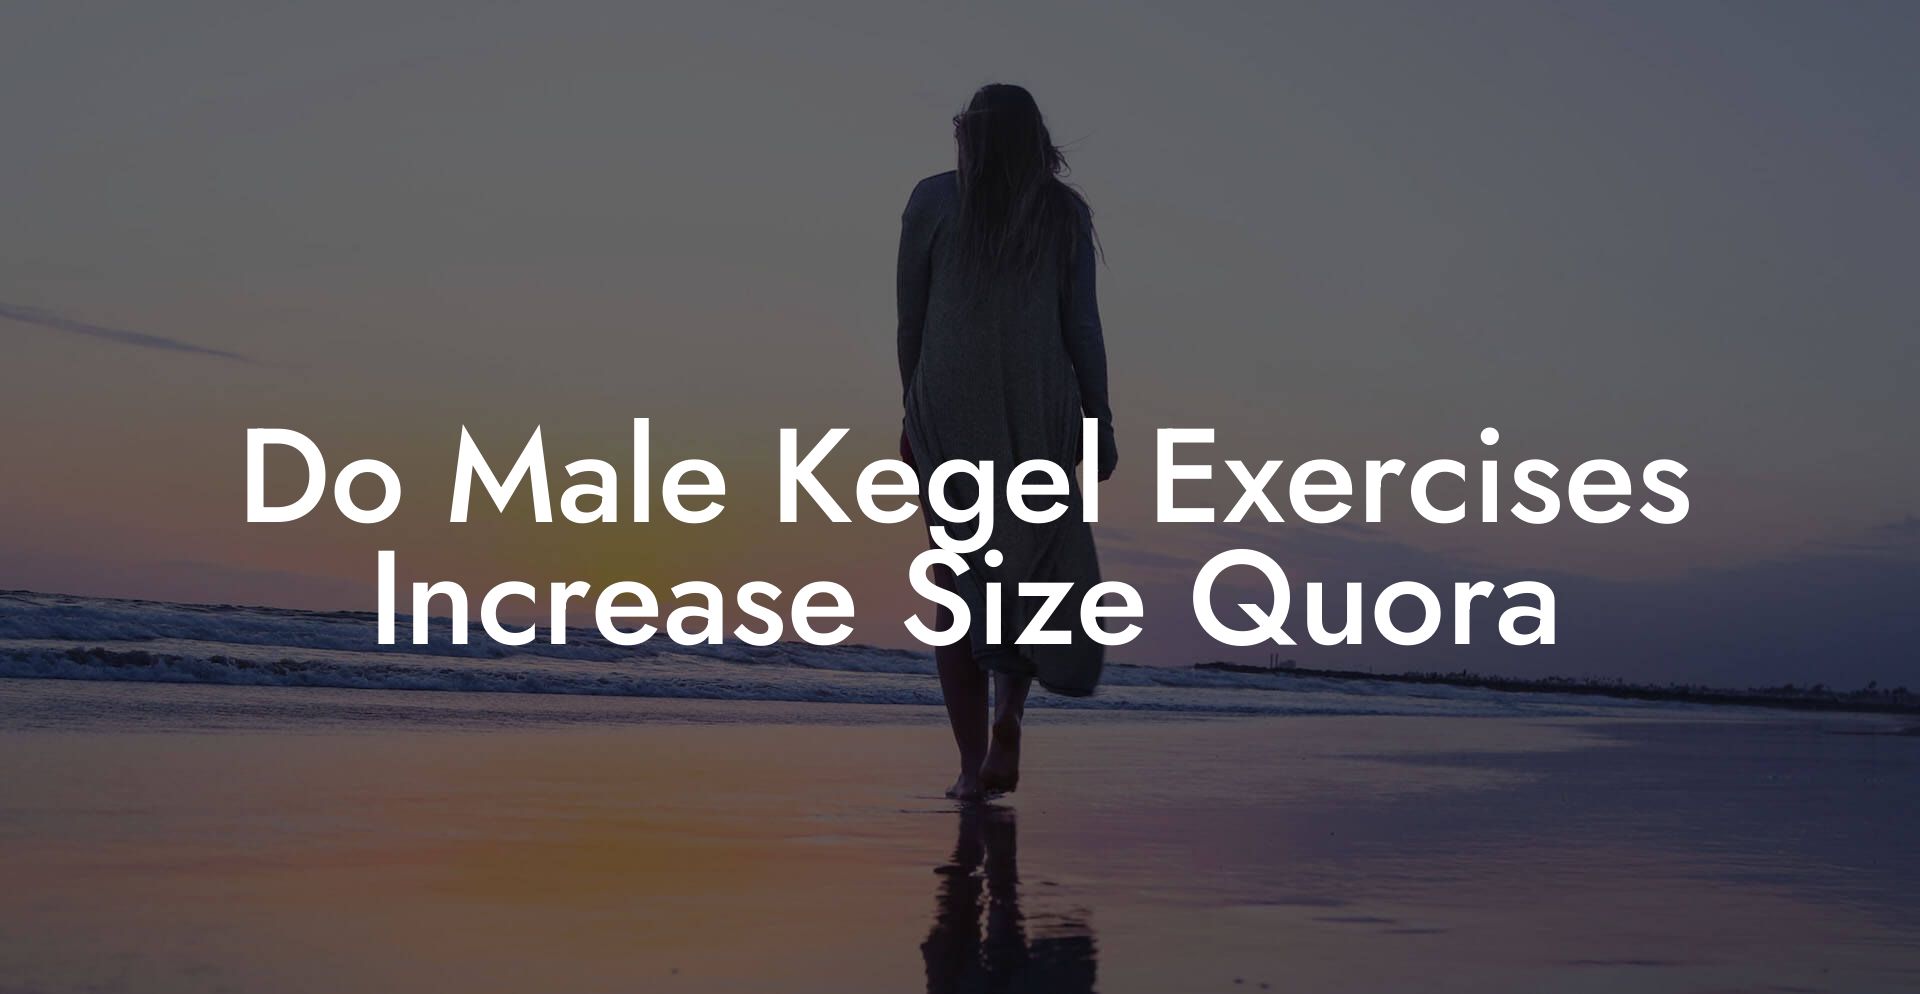 Do Male Kegel Exercises Increase Size Quora